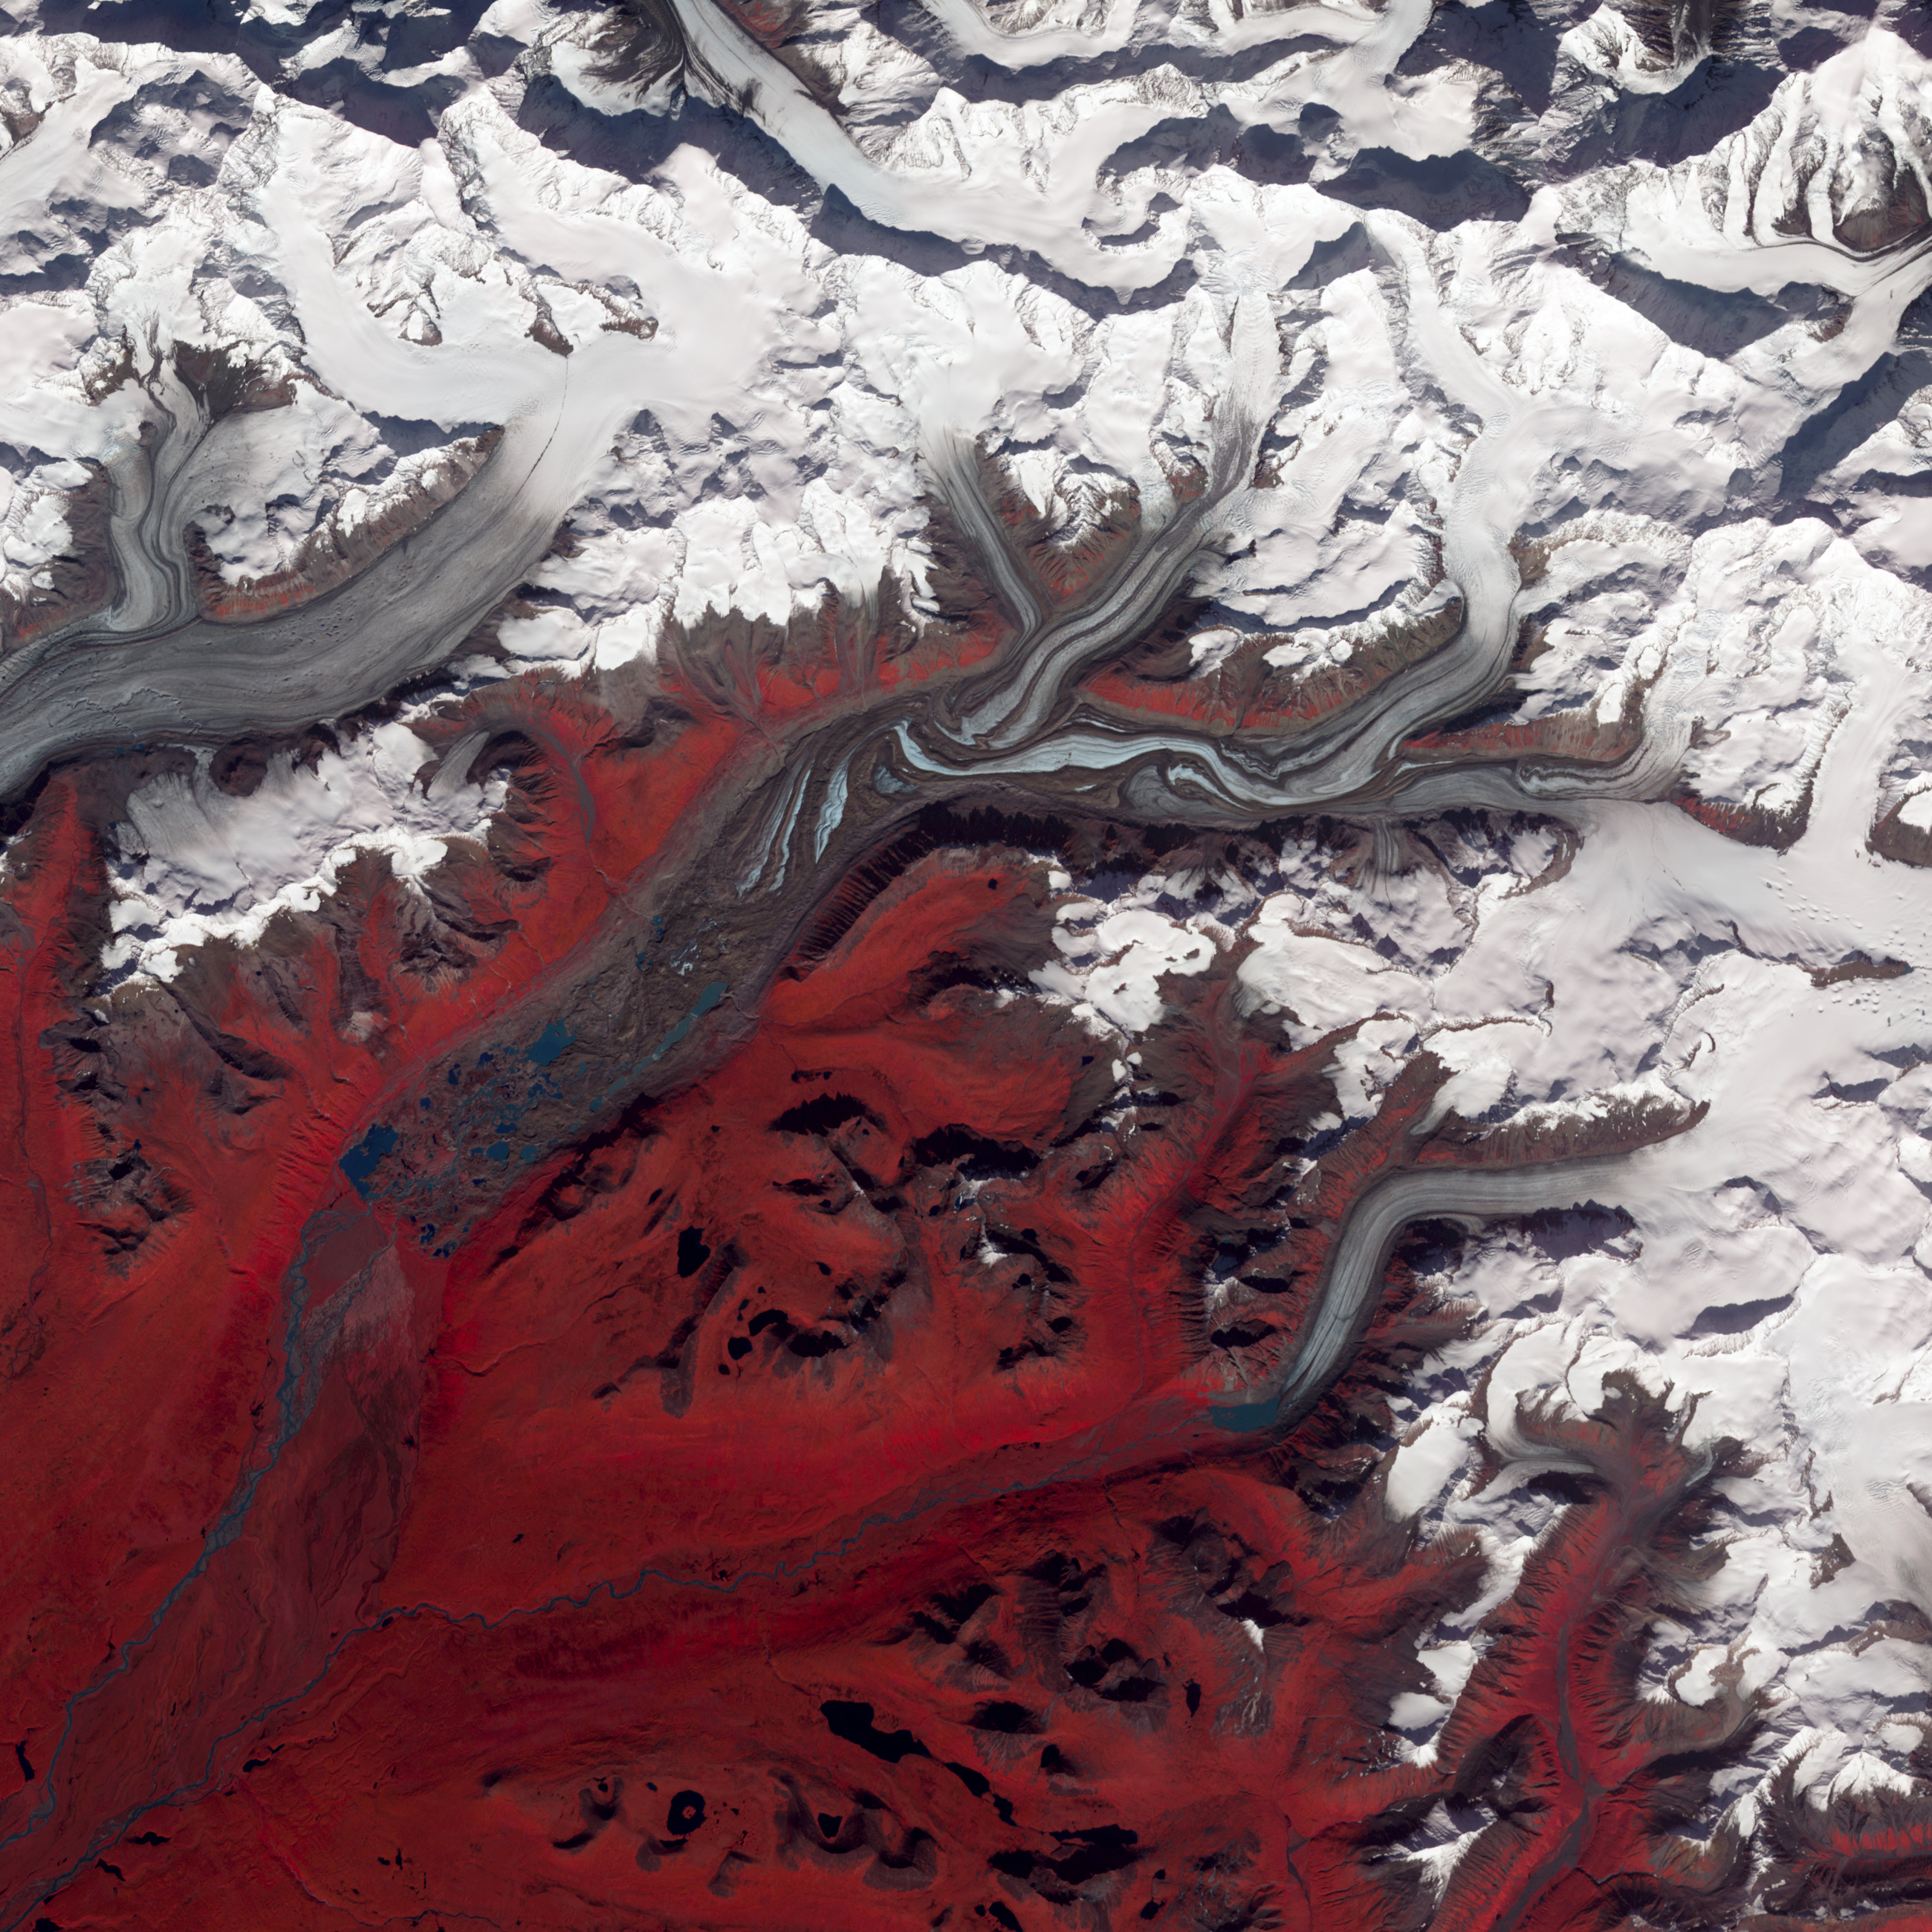 Susitna Glacier, Alaska - related image preview